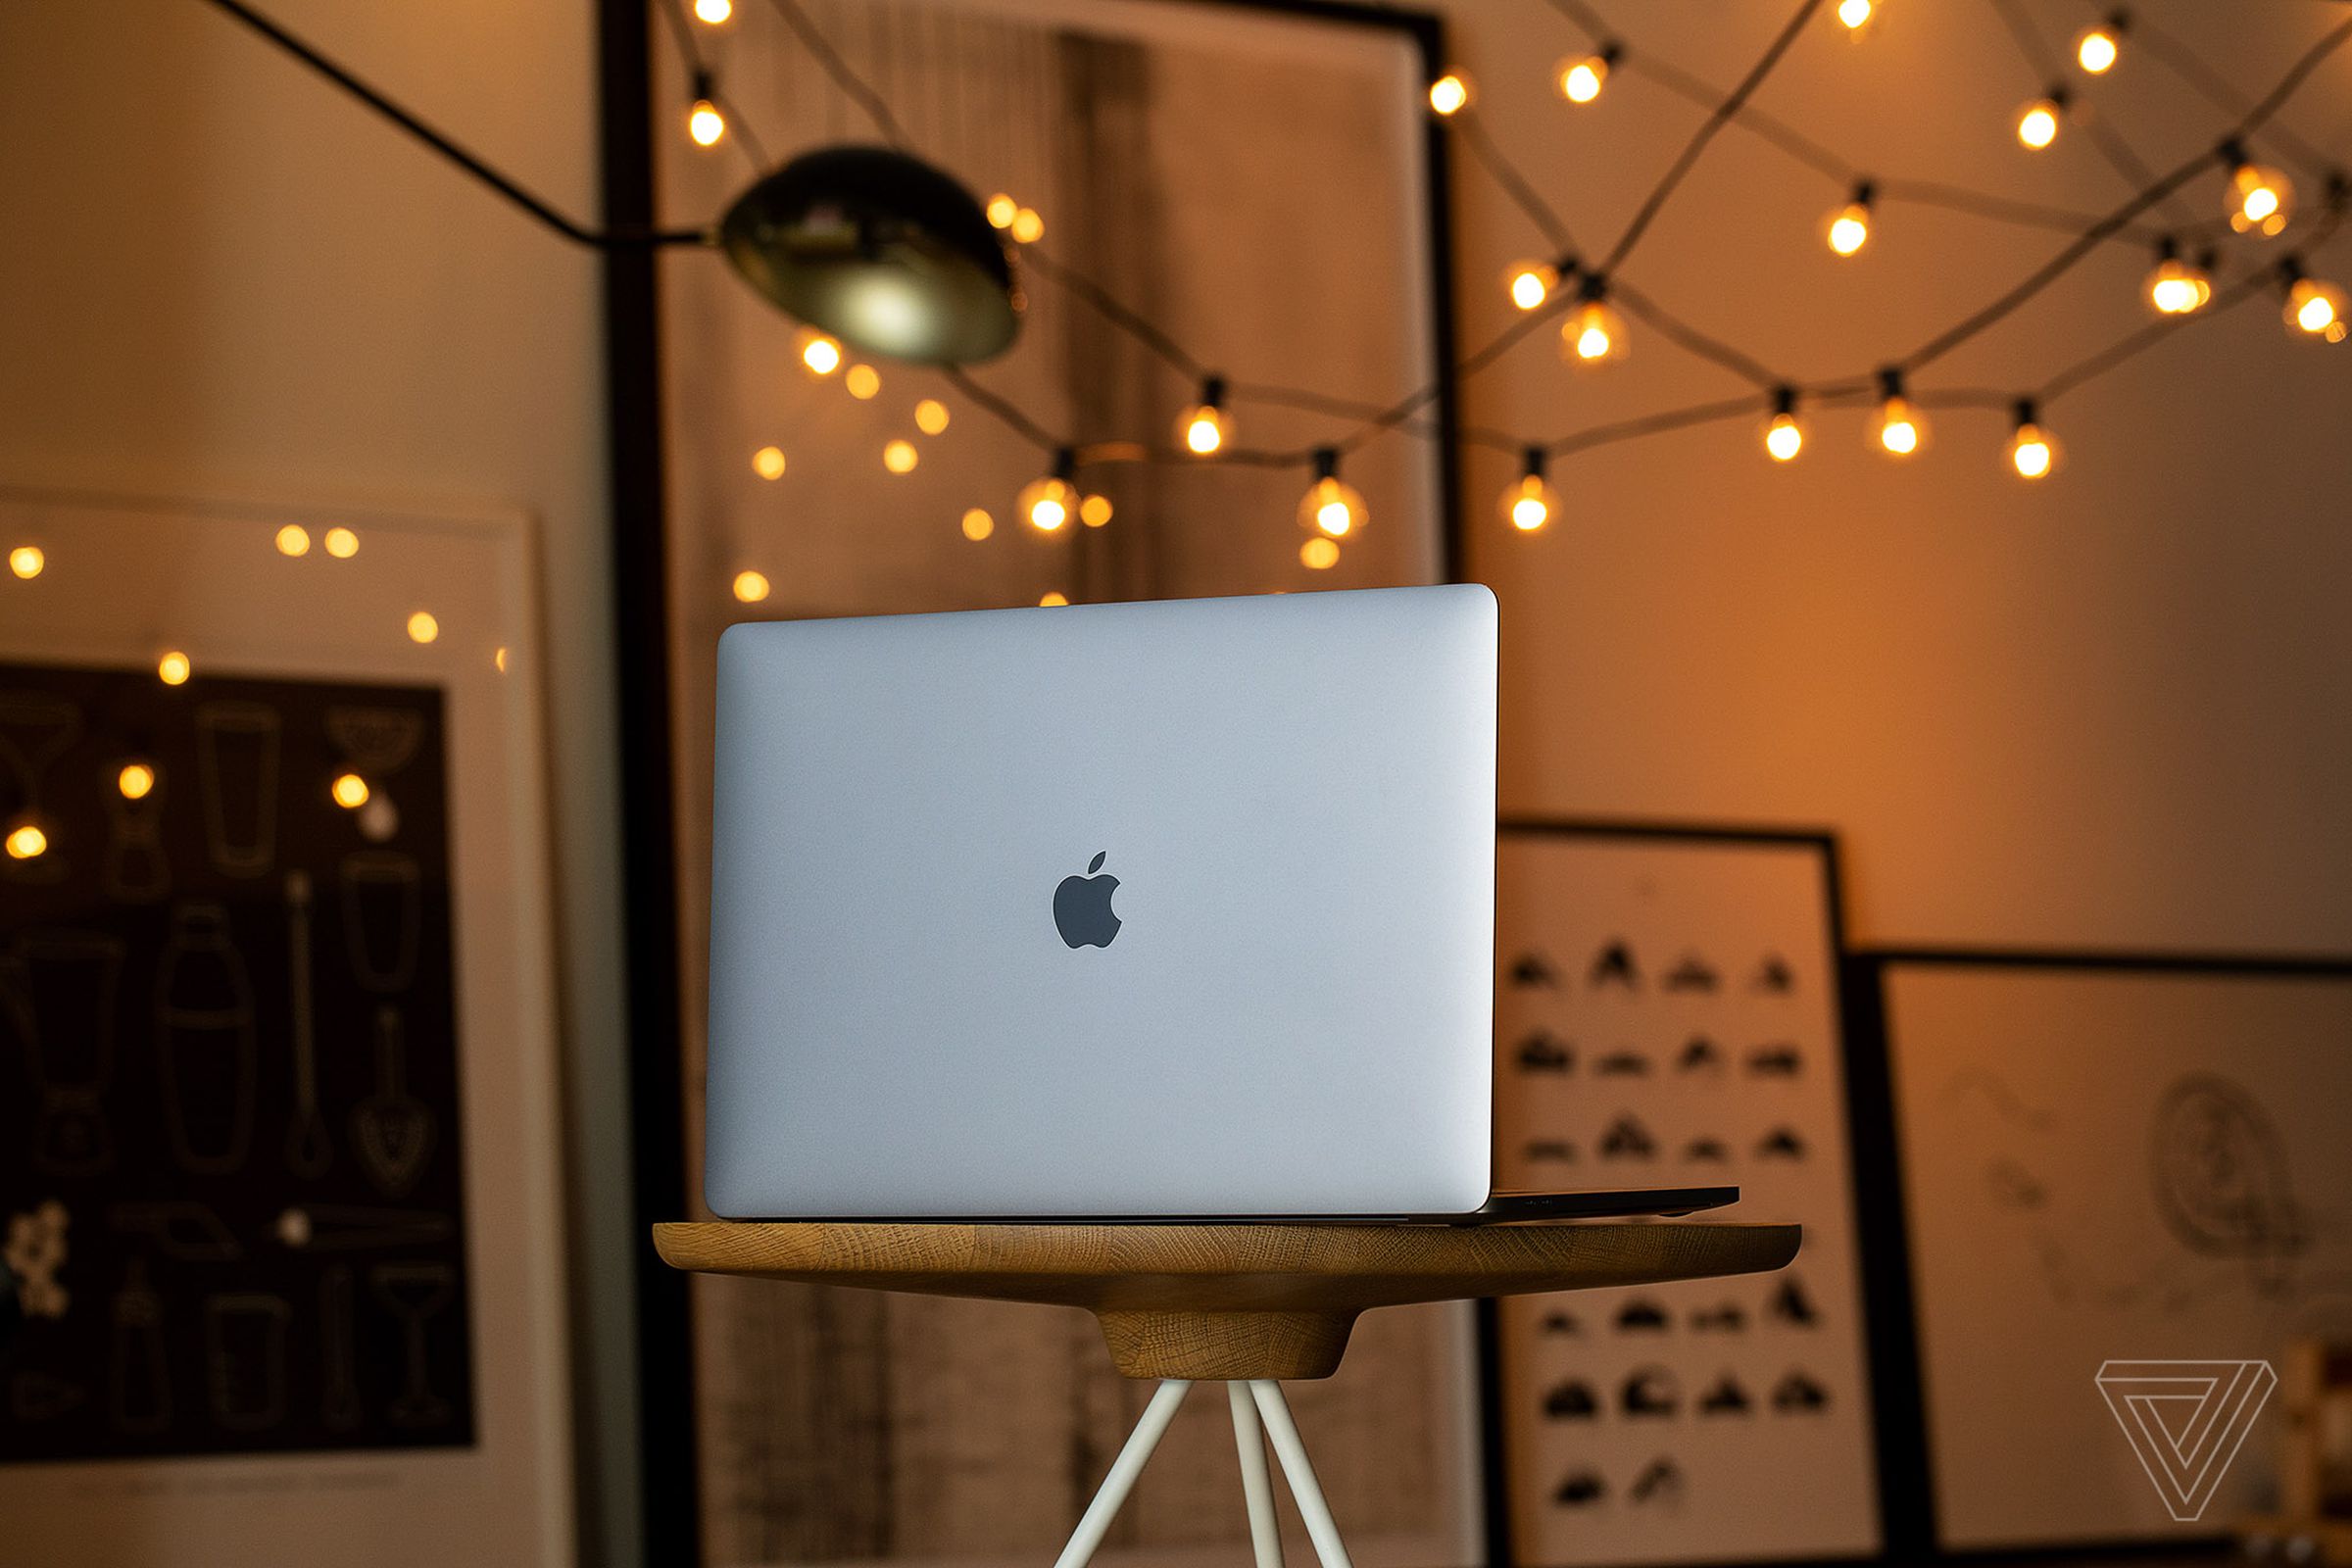 The 16-inch MacBook Pro